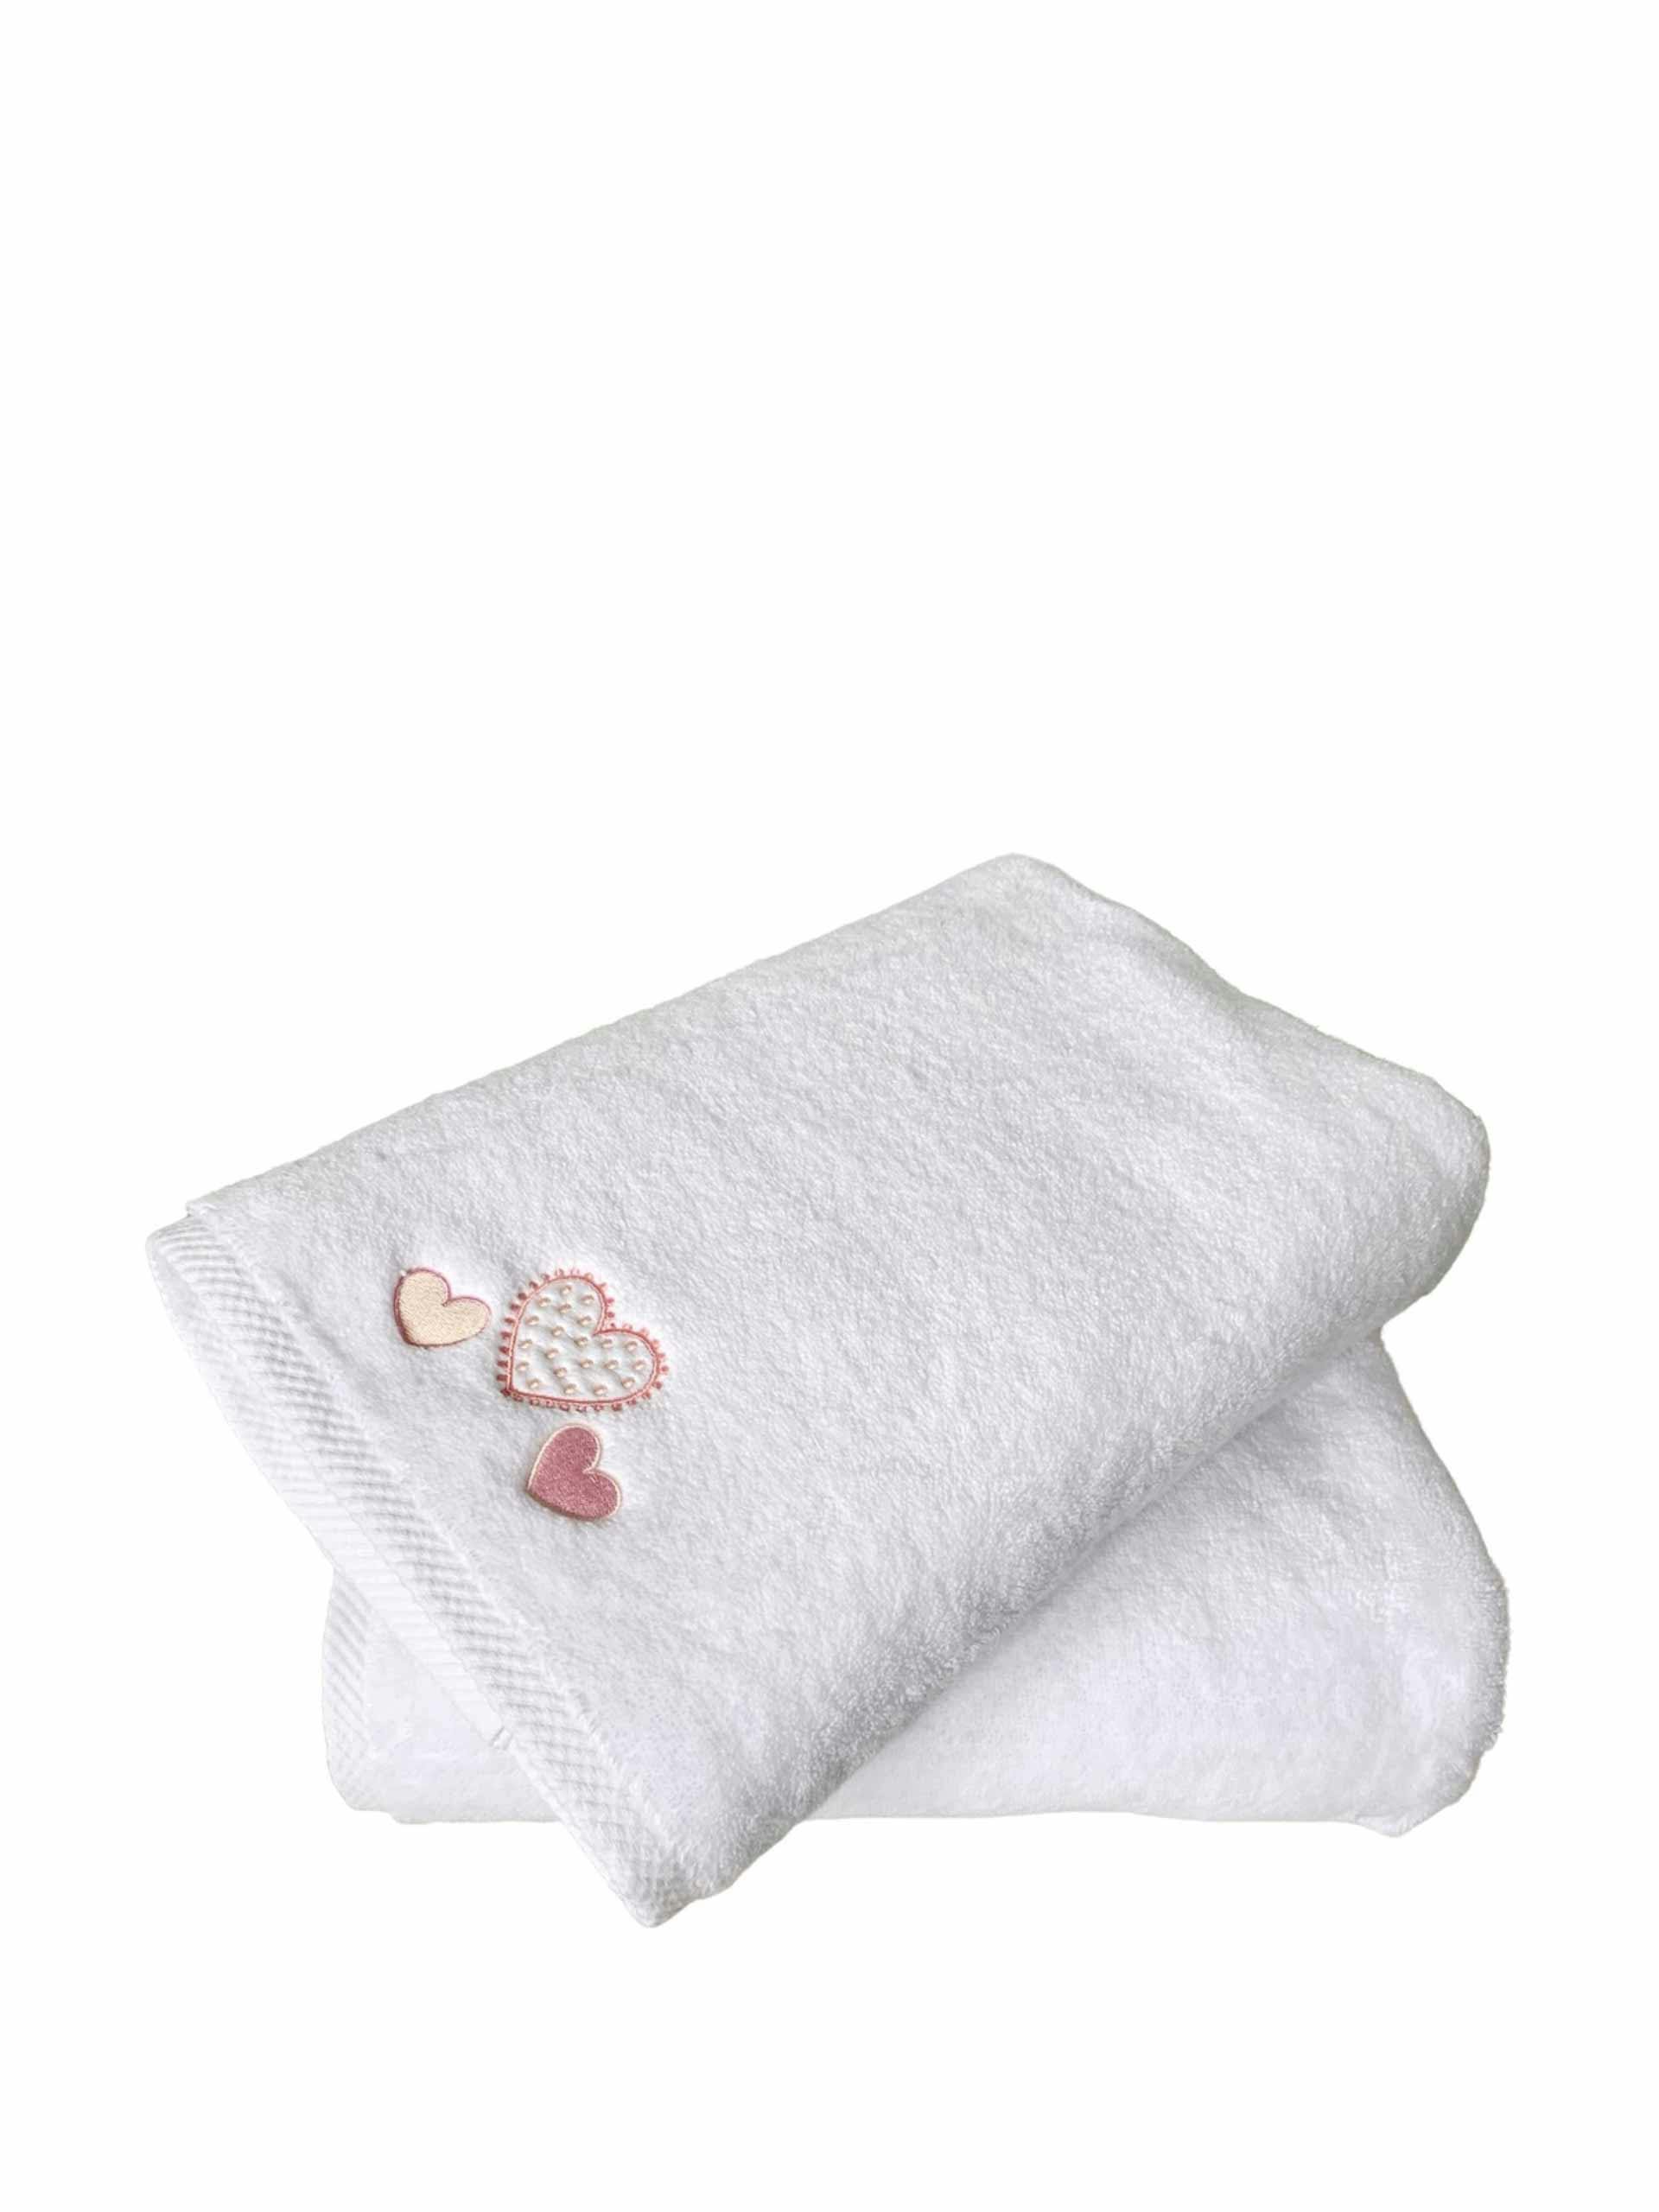 Heart motif towel and robe set